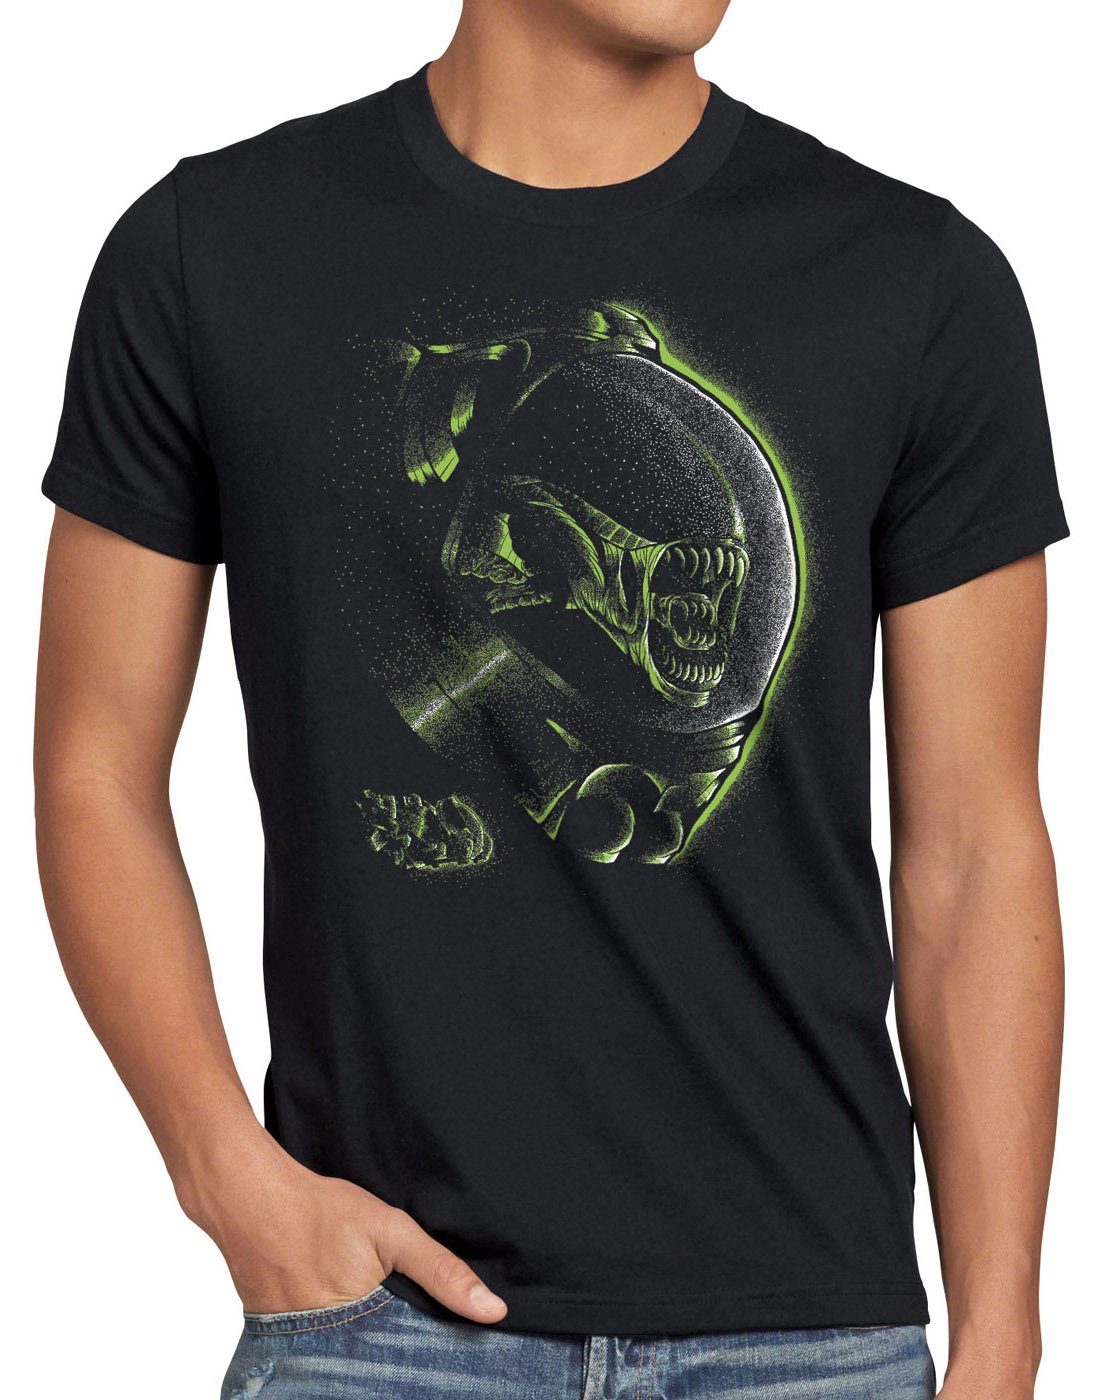 style3 T-Shirt Horror Herren ripley Alien Kino Sci-Fi Print-Shirt Film Nightmare ridley xenomorph